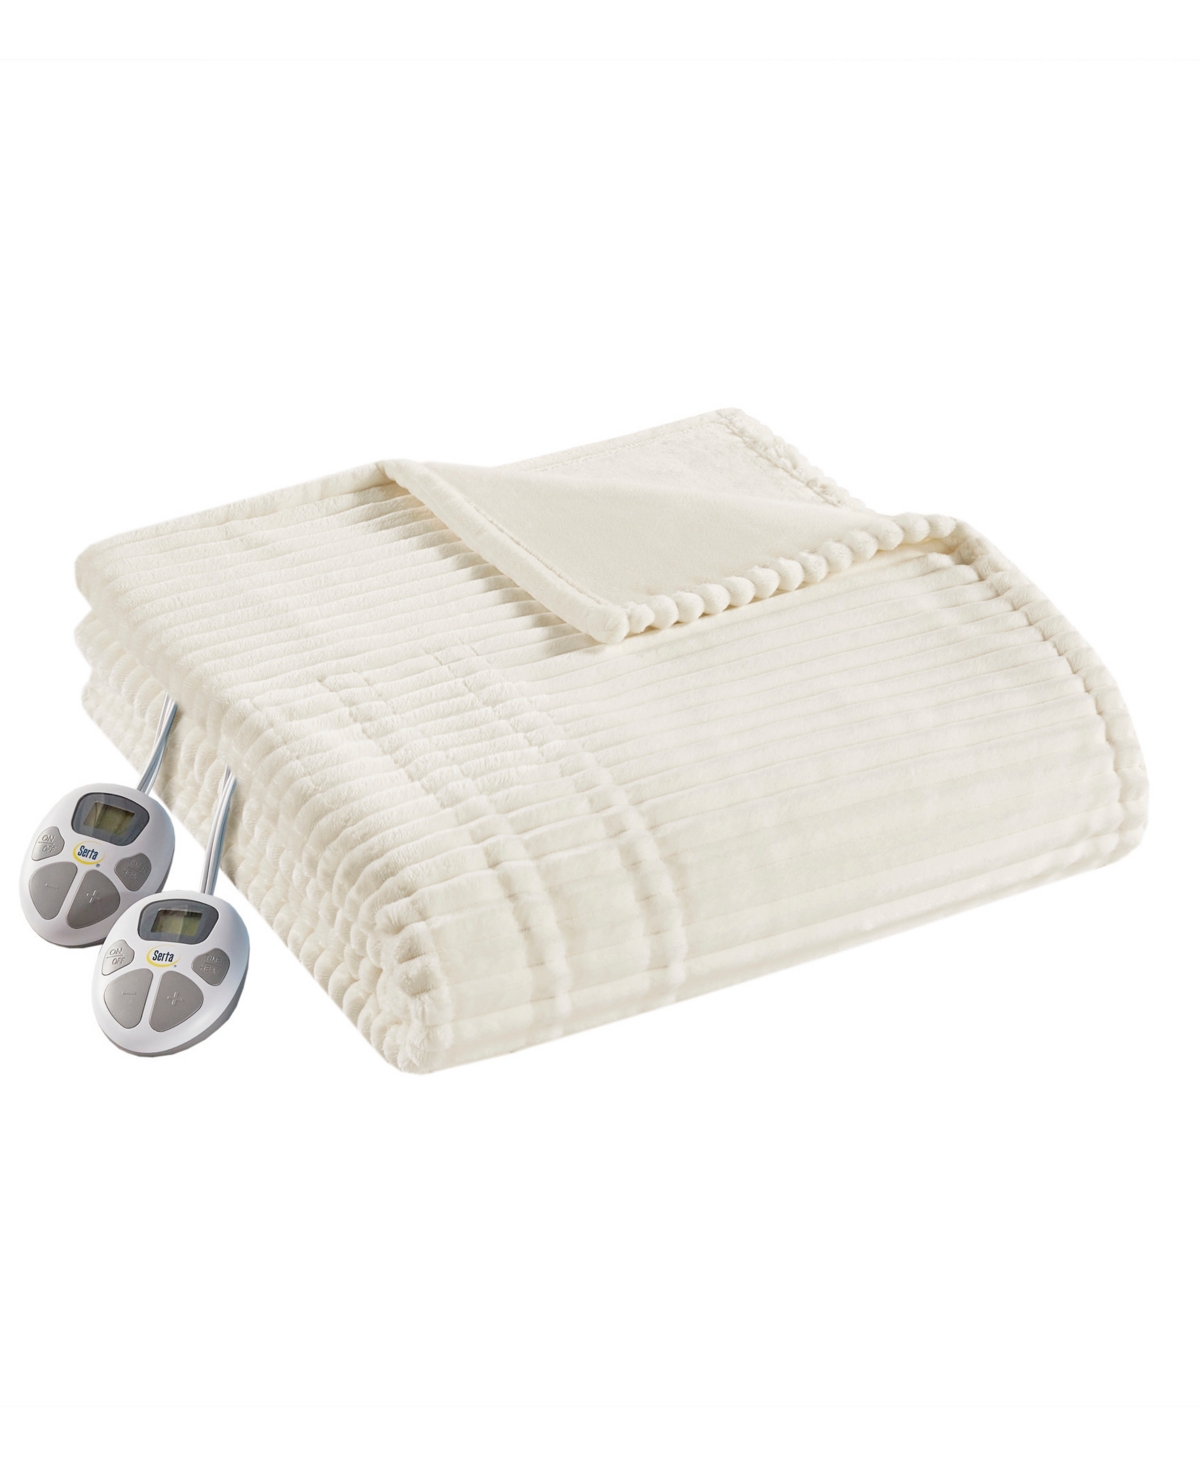 Serta Corded Plush Heated Blanket, Full In Ivory